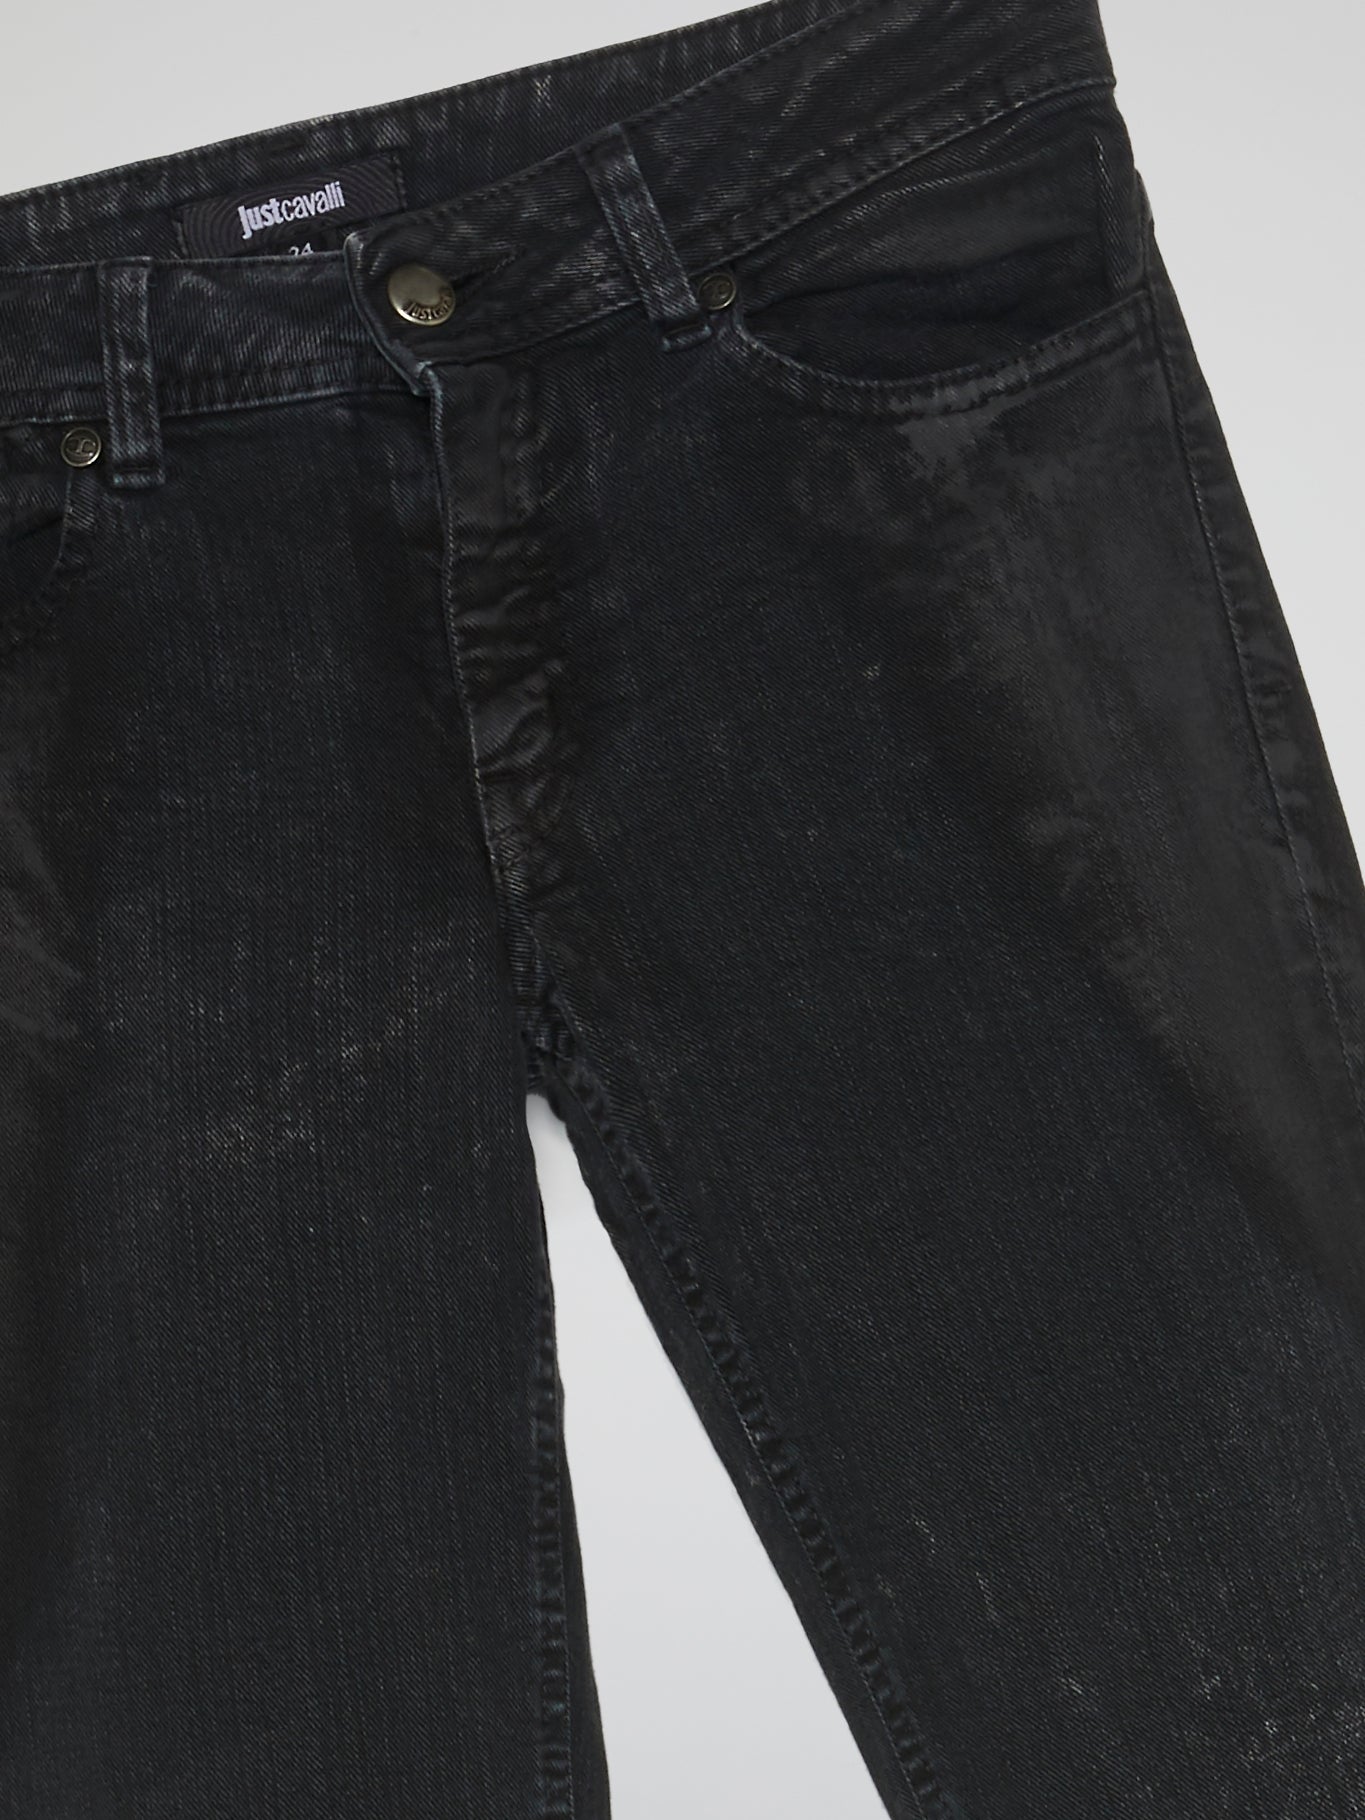 Black Distressed Skinny Fit Jeans